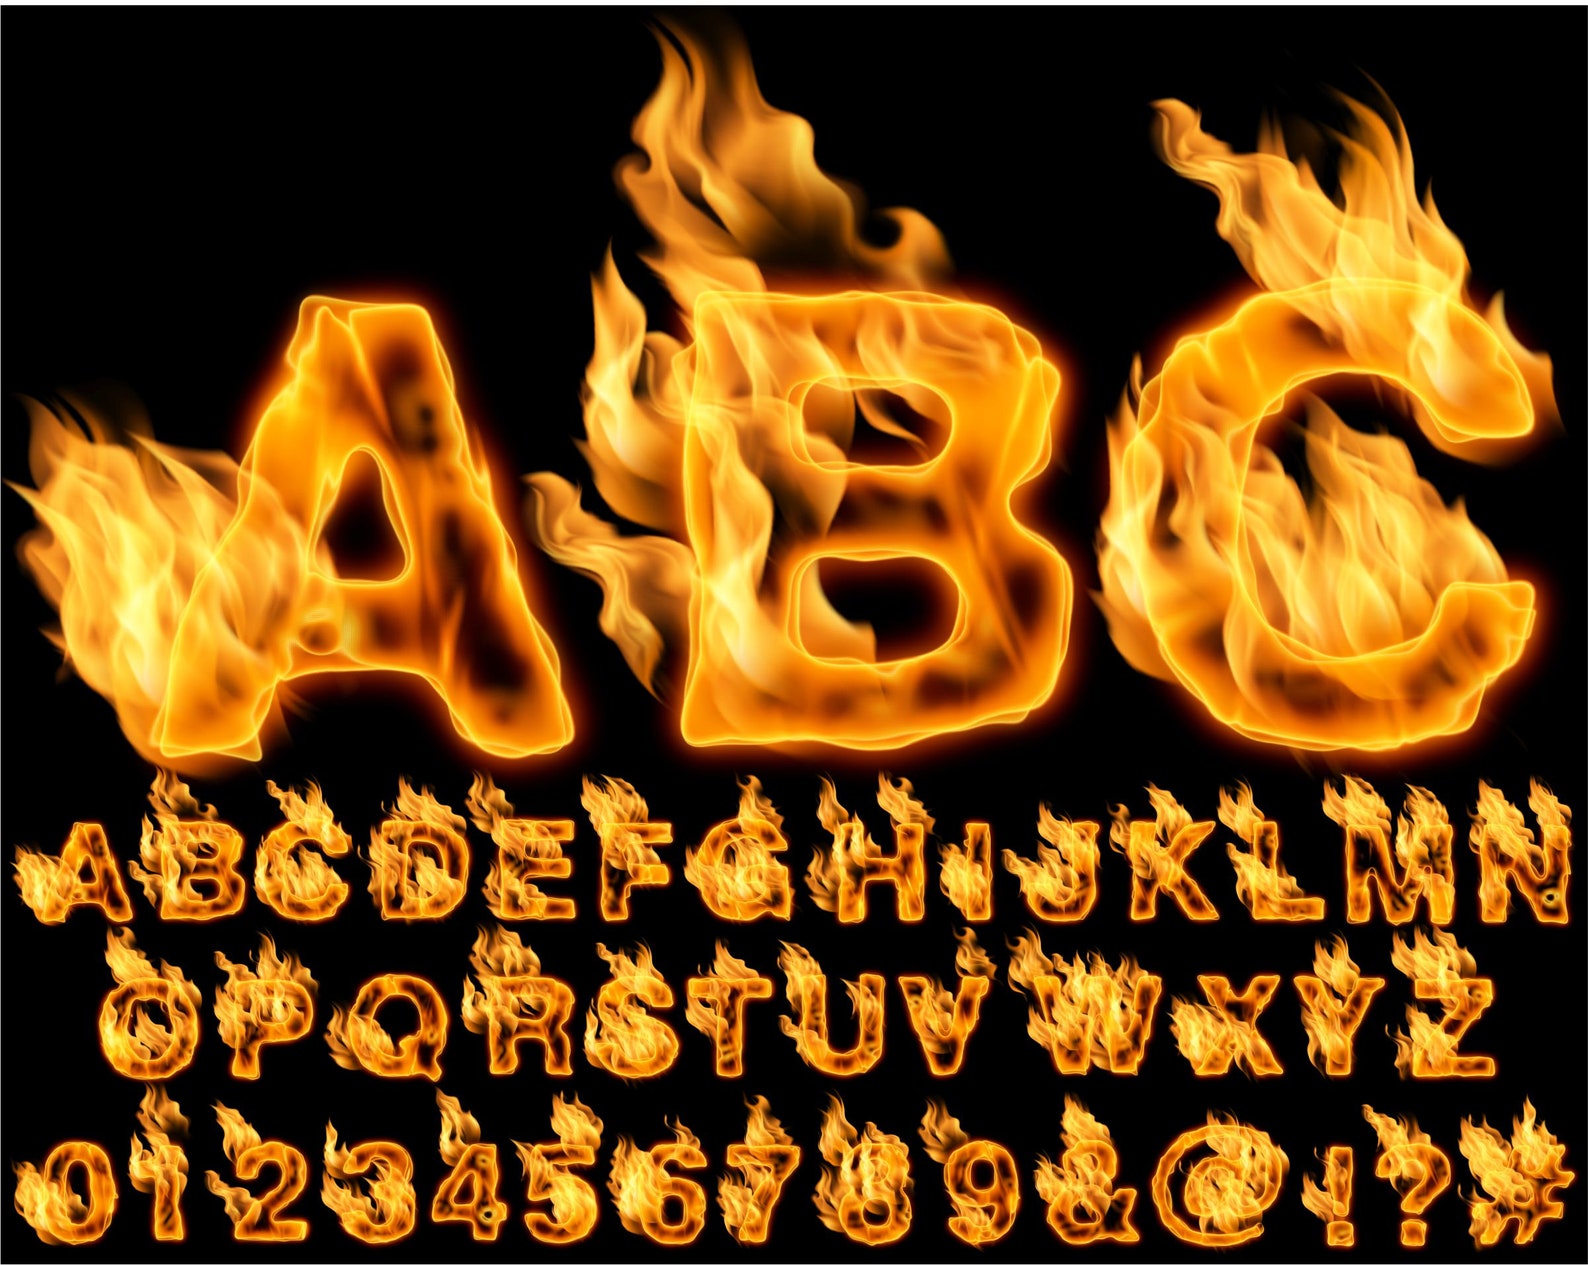 Fire PNG Letters Transparent Background Flame Alphabet Clip - Etsy